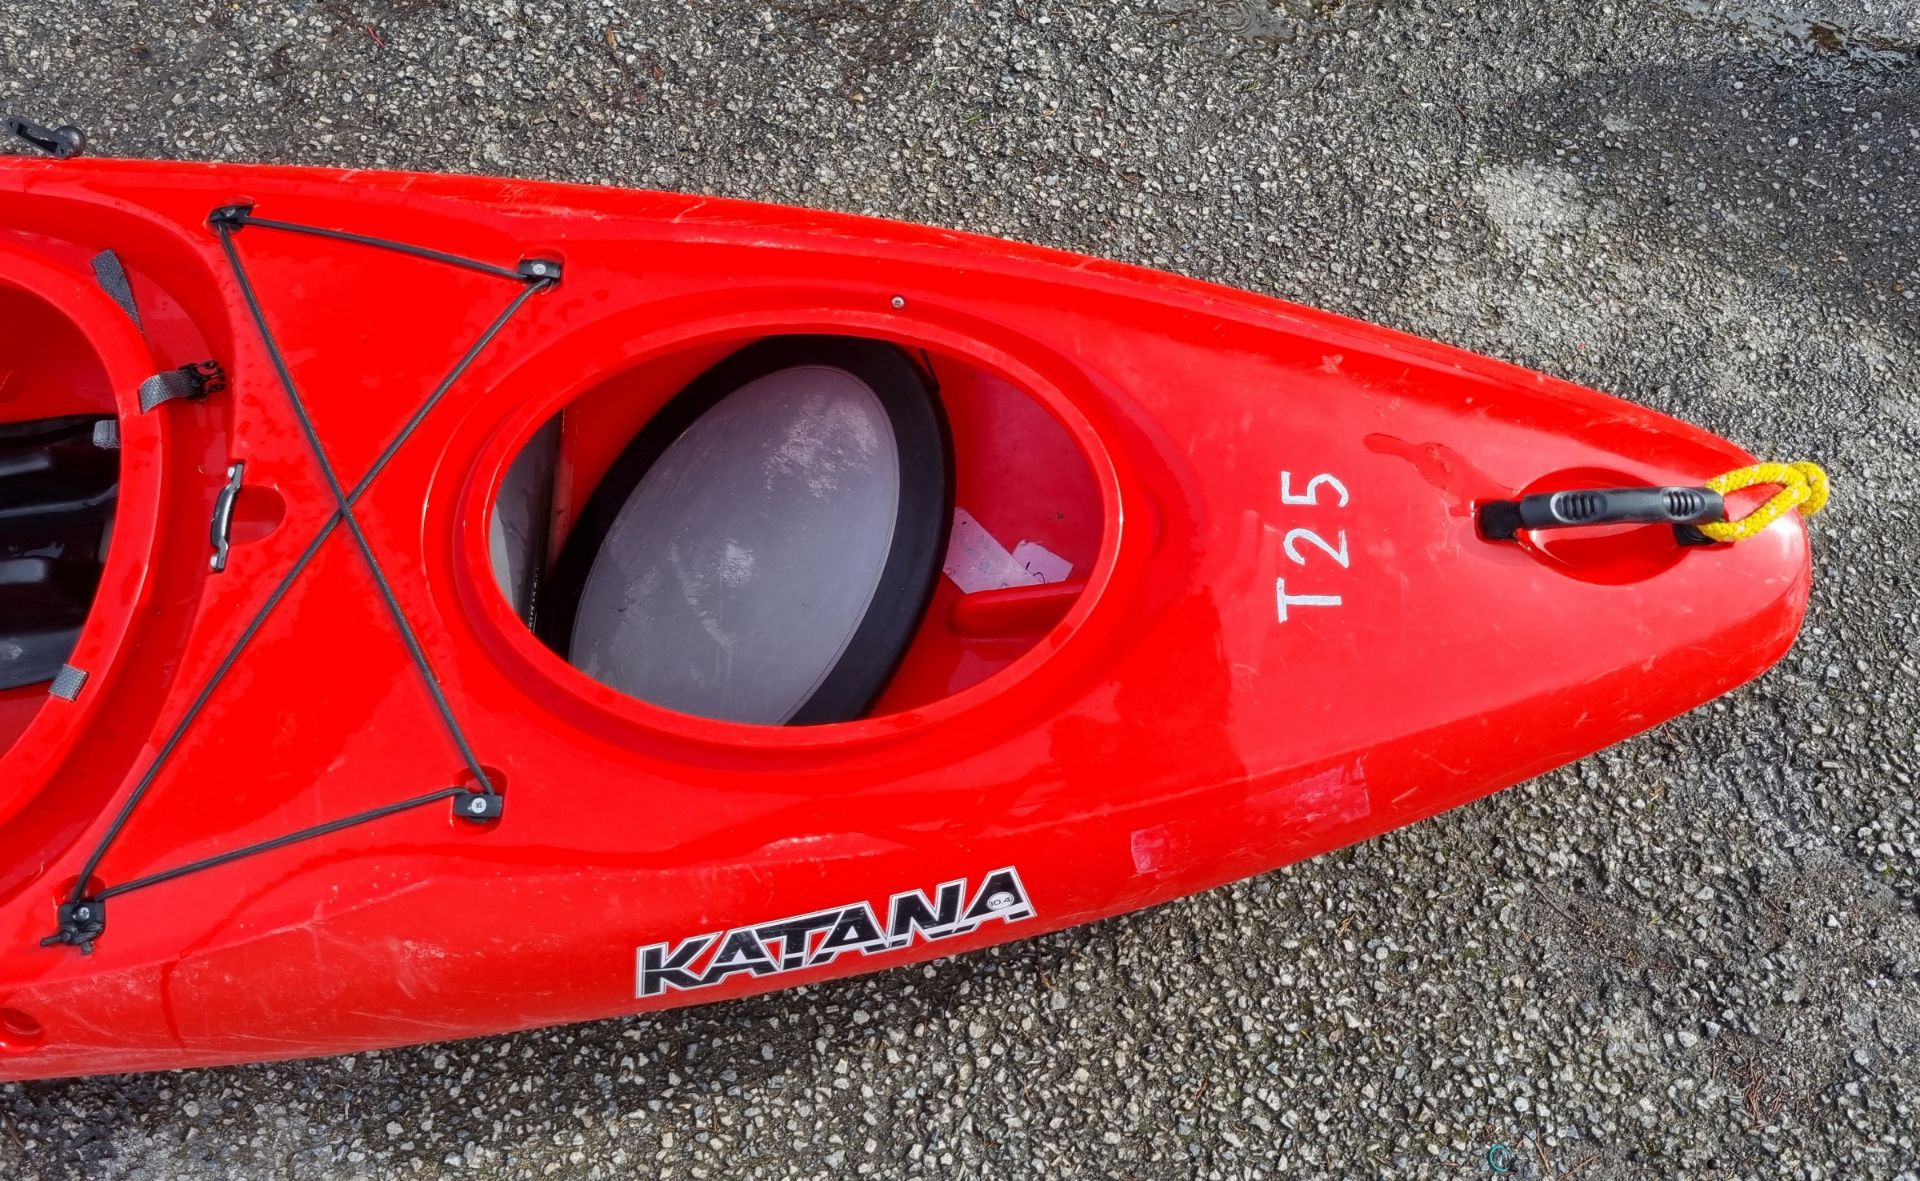 Dagger Katana polyethylene kayak - red - W 3200 x D 660 x H 420mm - Image 3 of 8